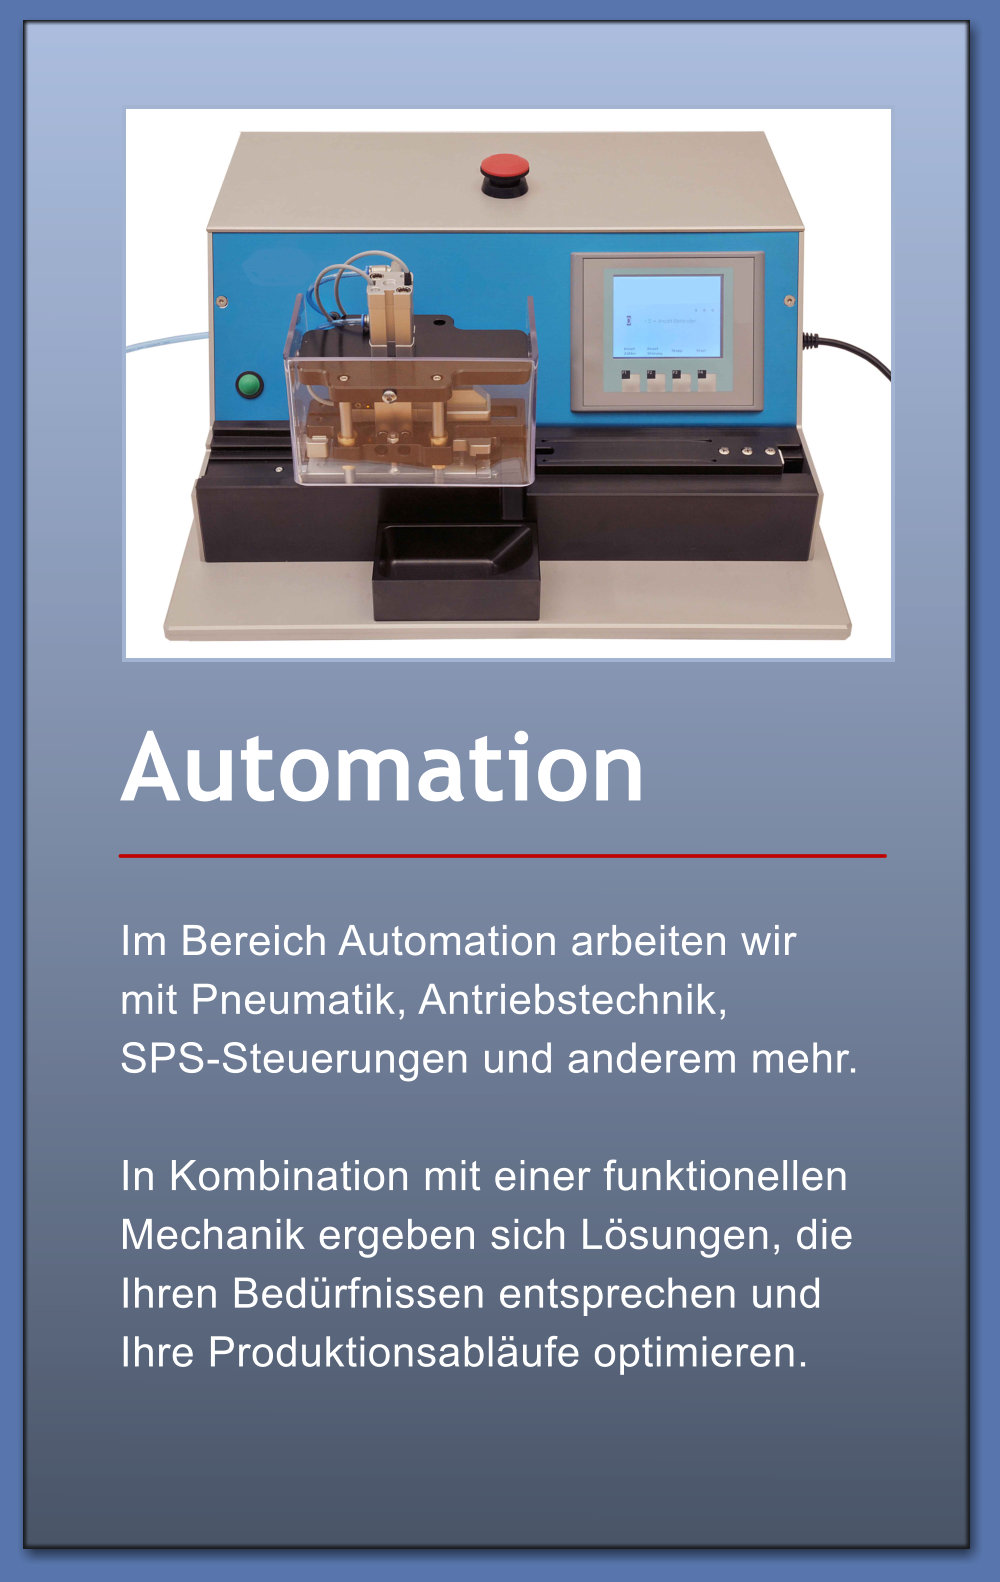 images/uebersicht/Automation-2.jpg